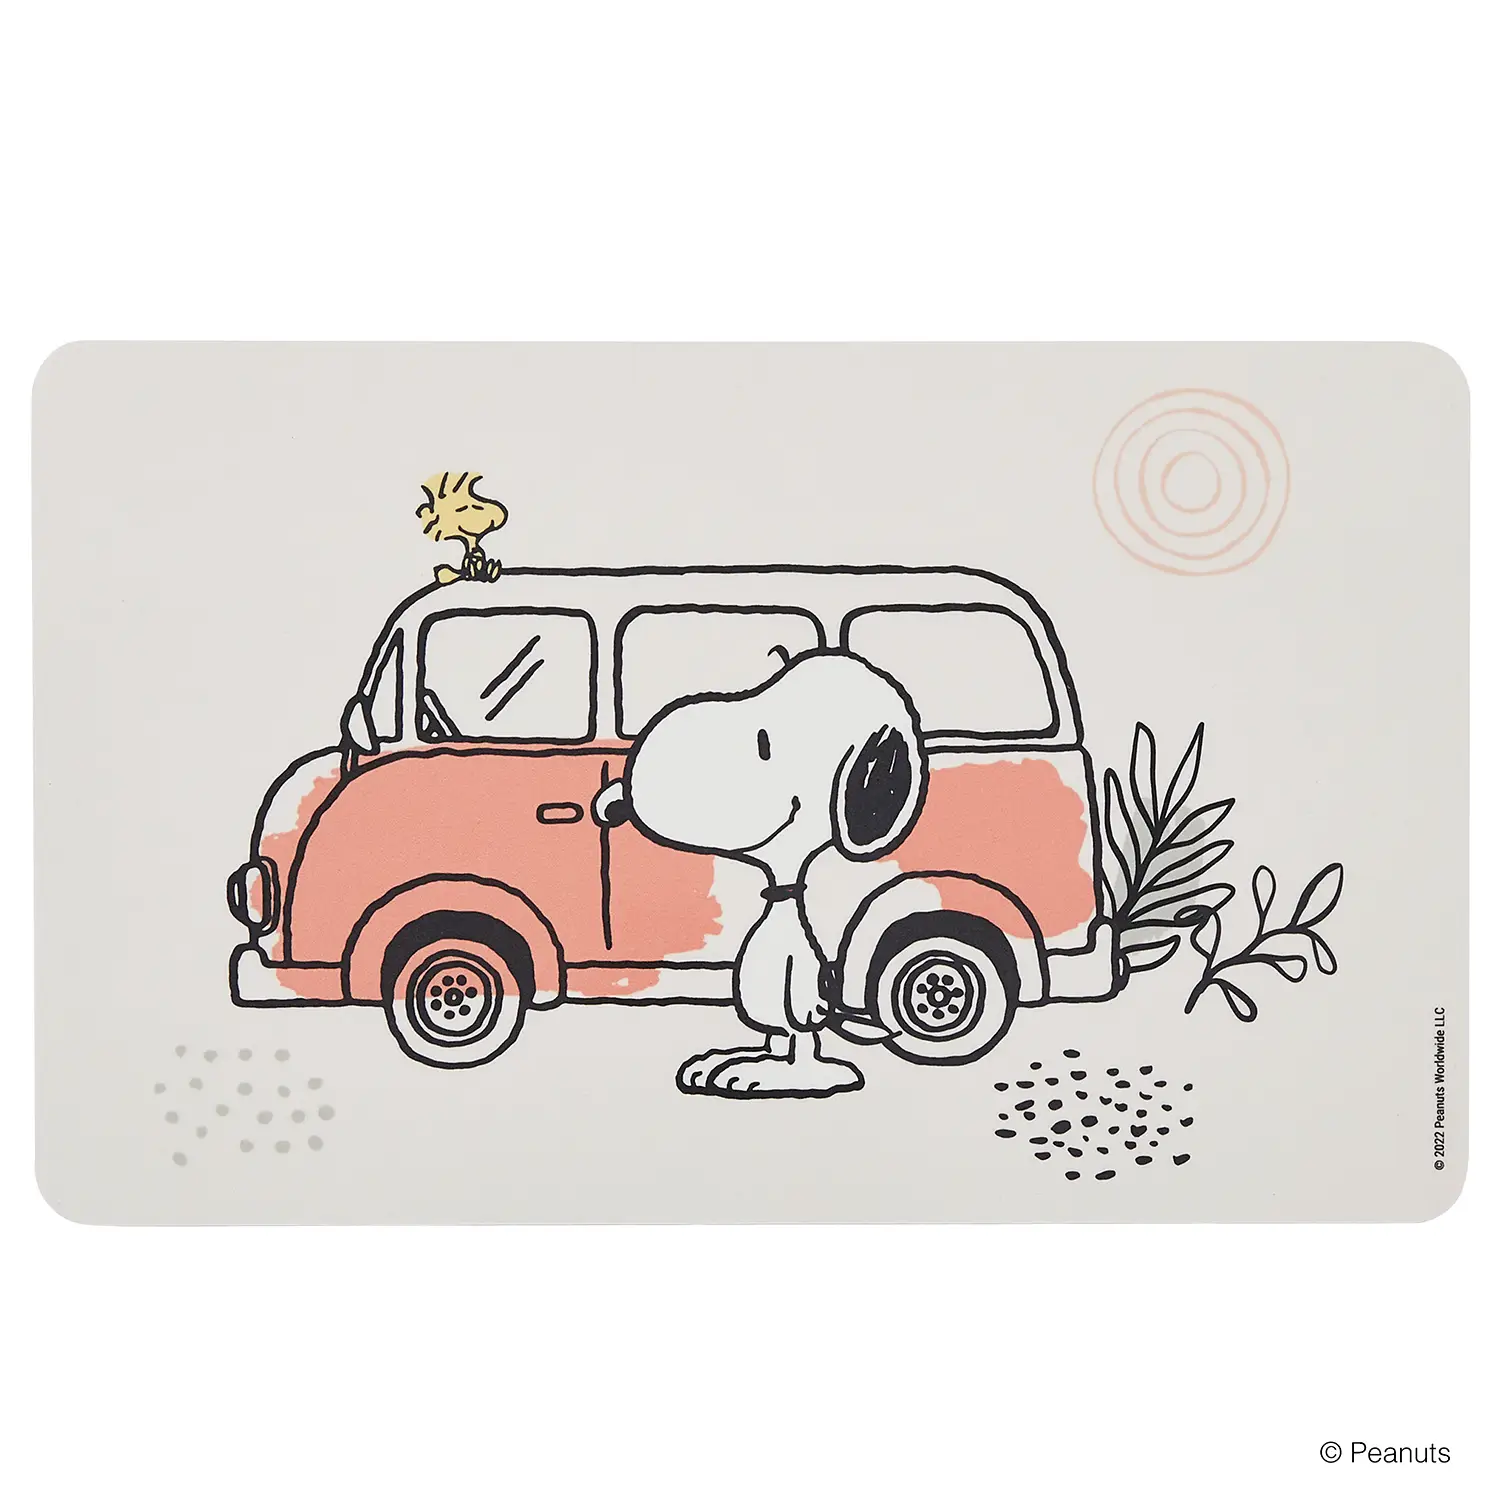 Bus Snoopy PEANUTS Fr眉hst眉cksbrettchen